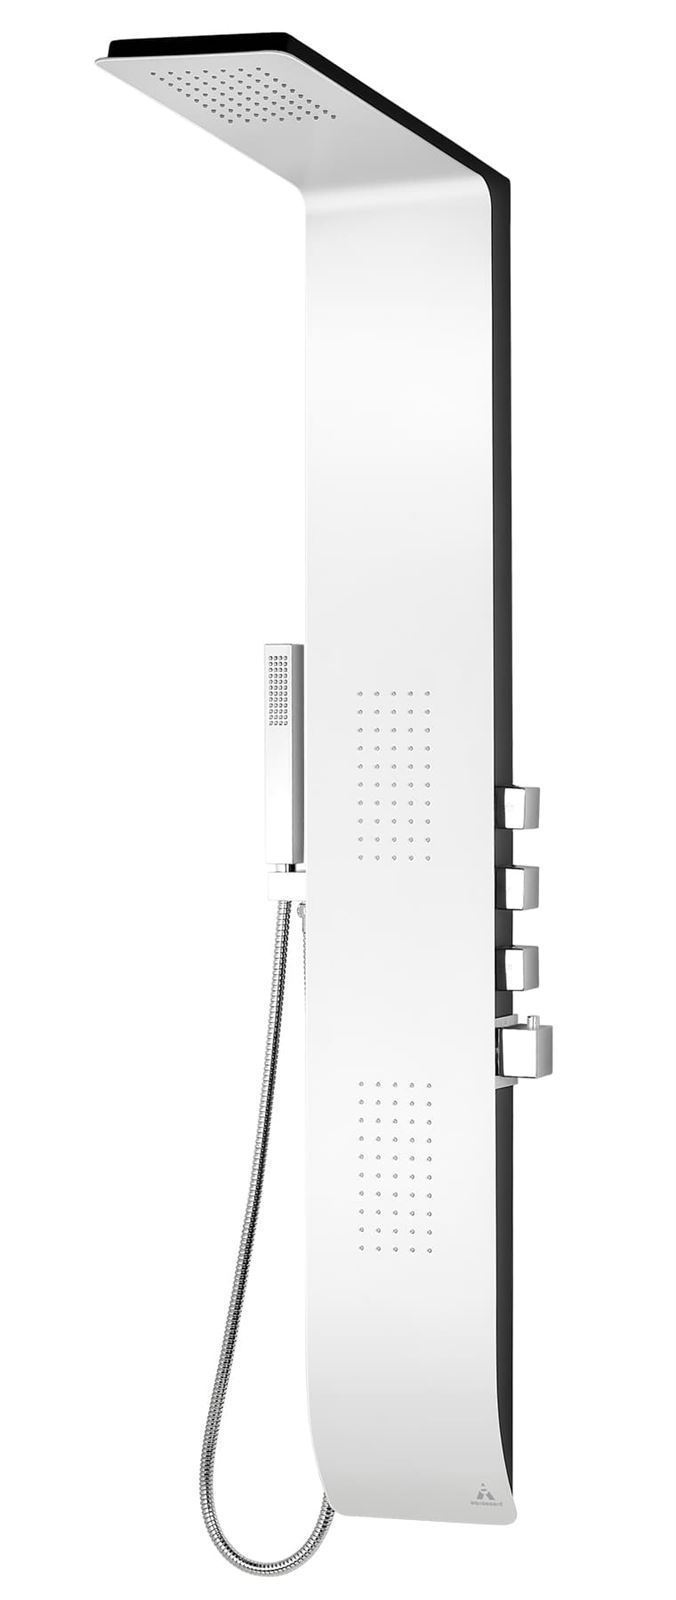 Columna hidromasaje termostática Kiara - Imagen 1